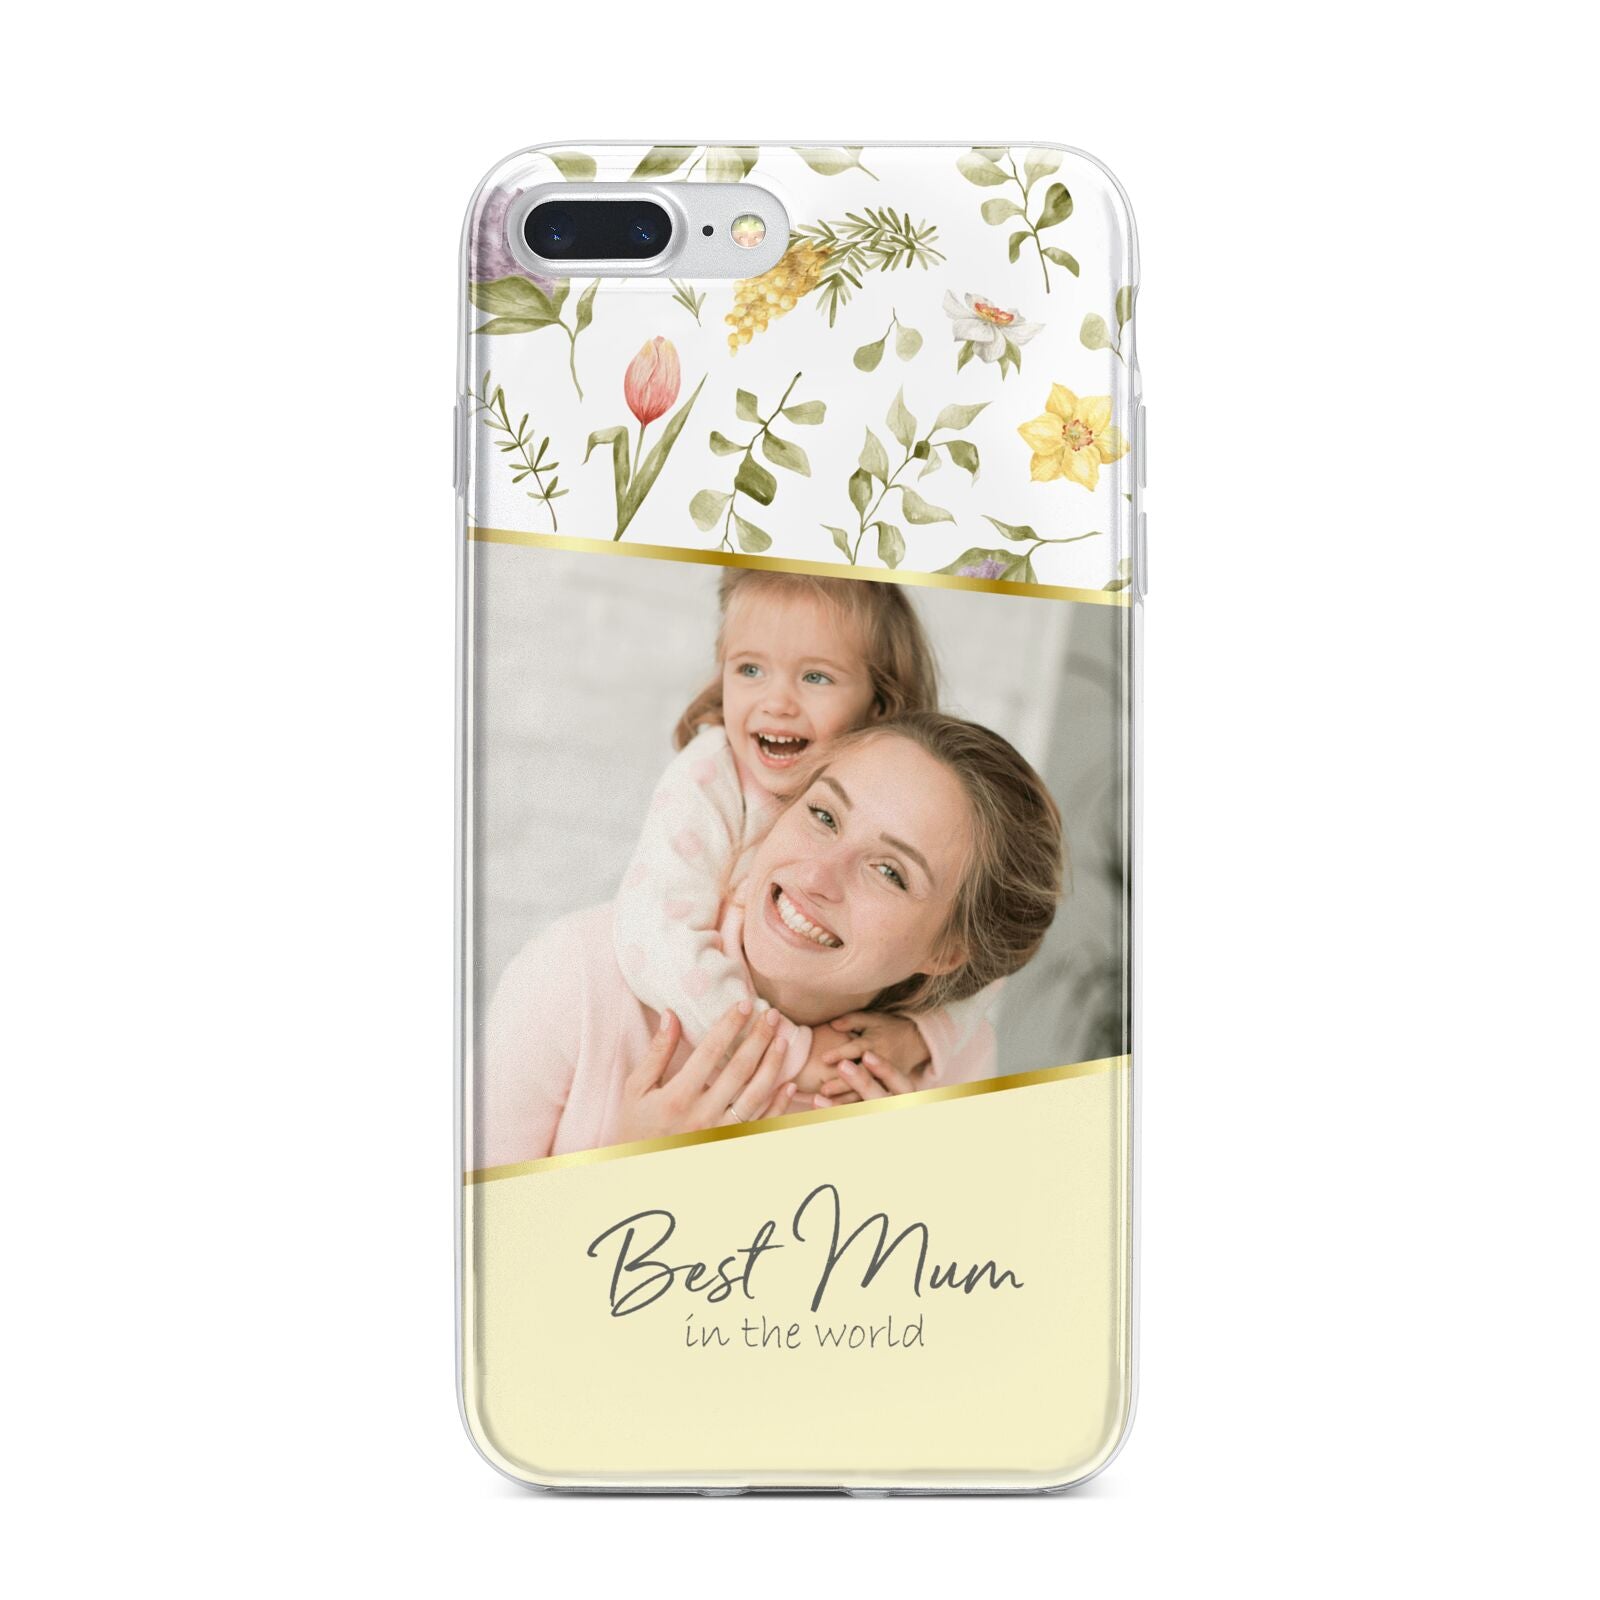 Personalised Best Mum iPhone 7 Plus Bumper Case on Silver iPhone